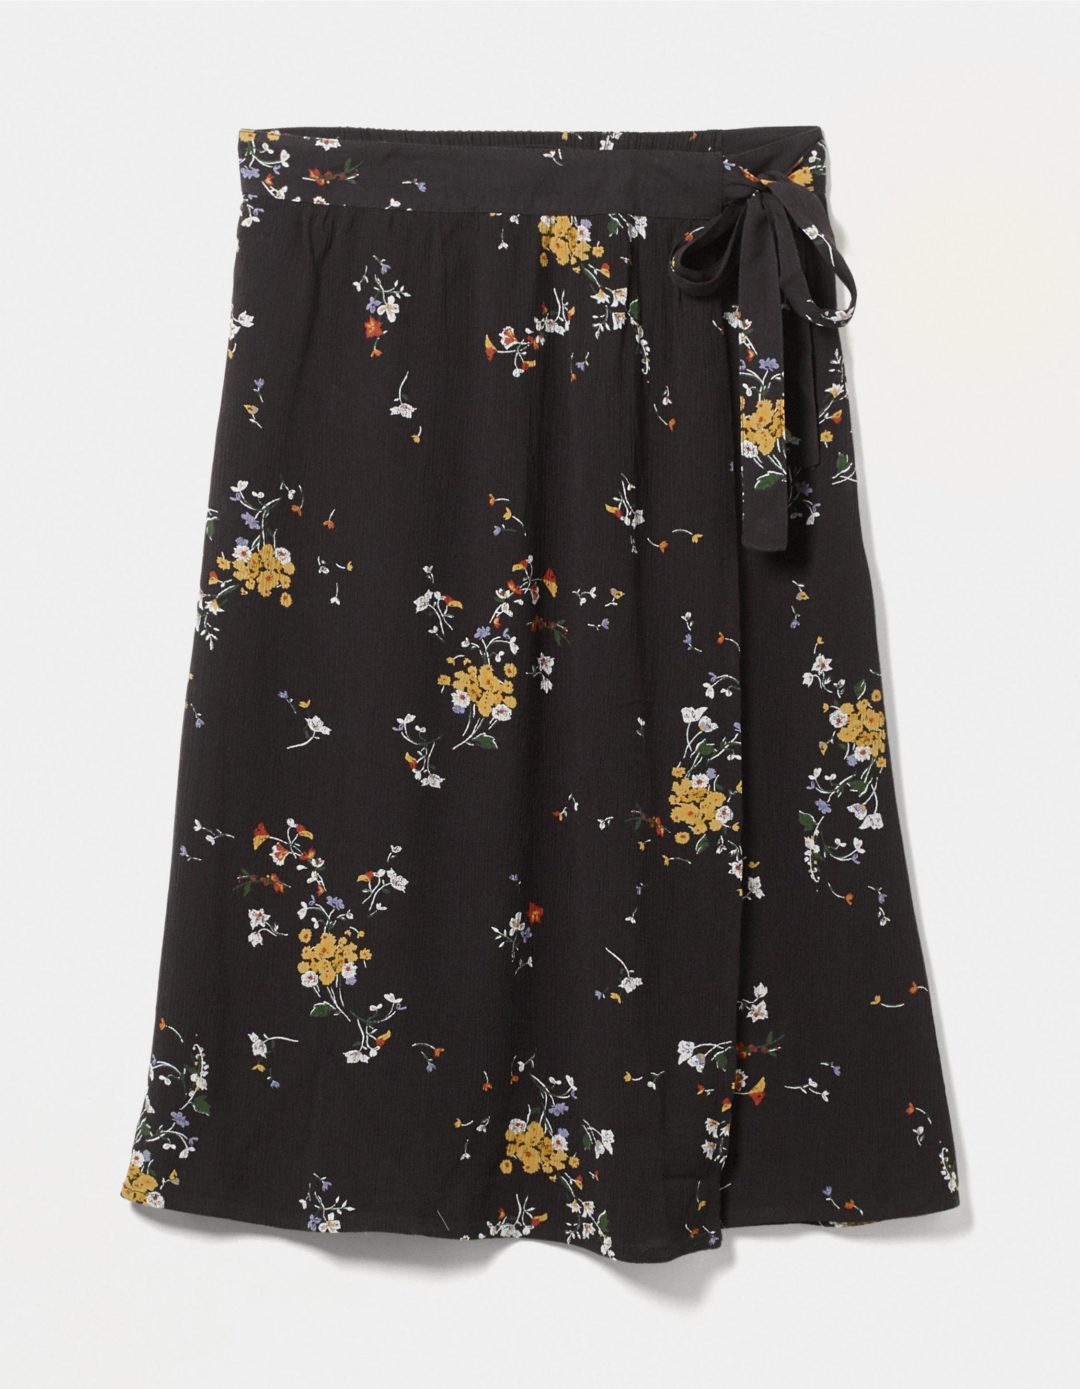 Five Floral Skirts For Spring – JacquardFlower